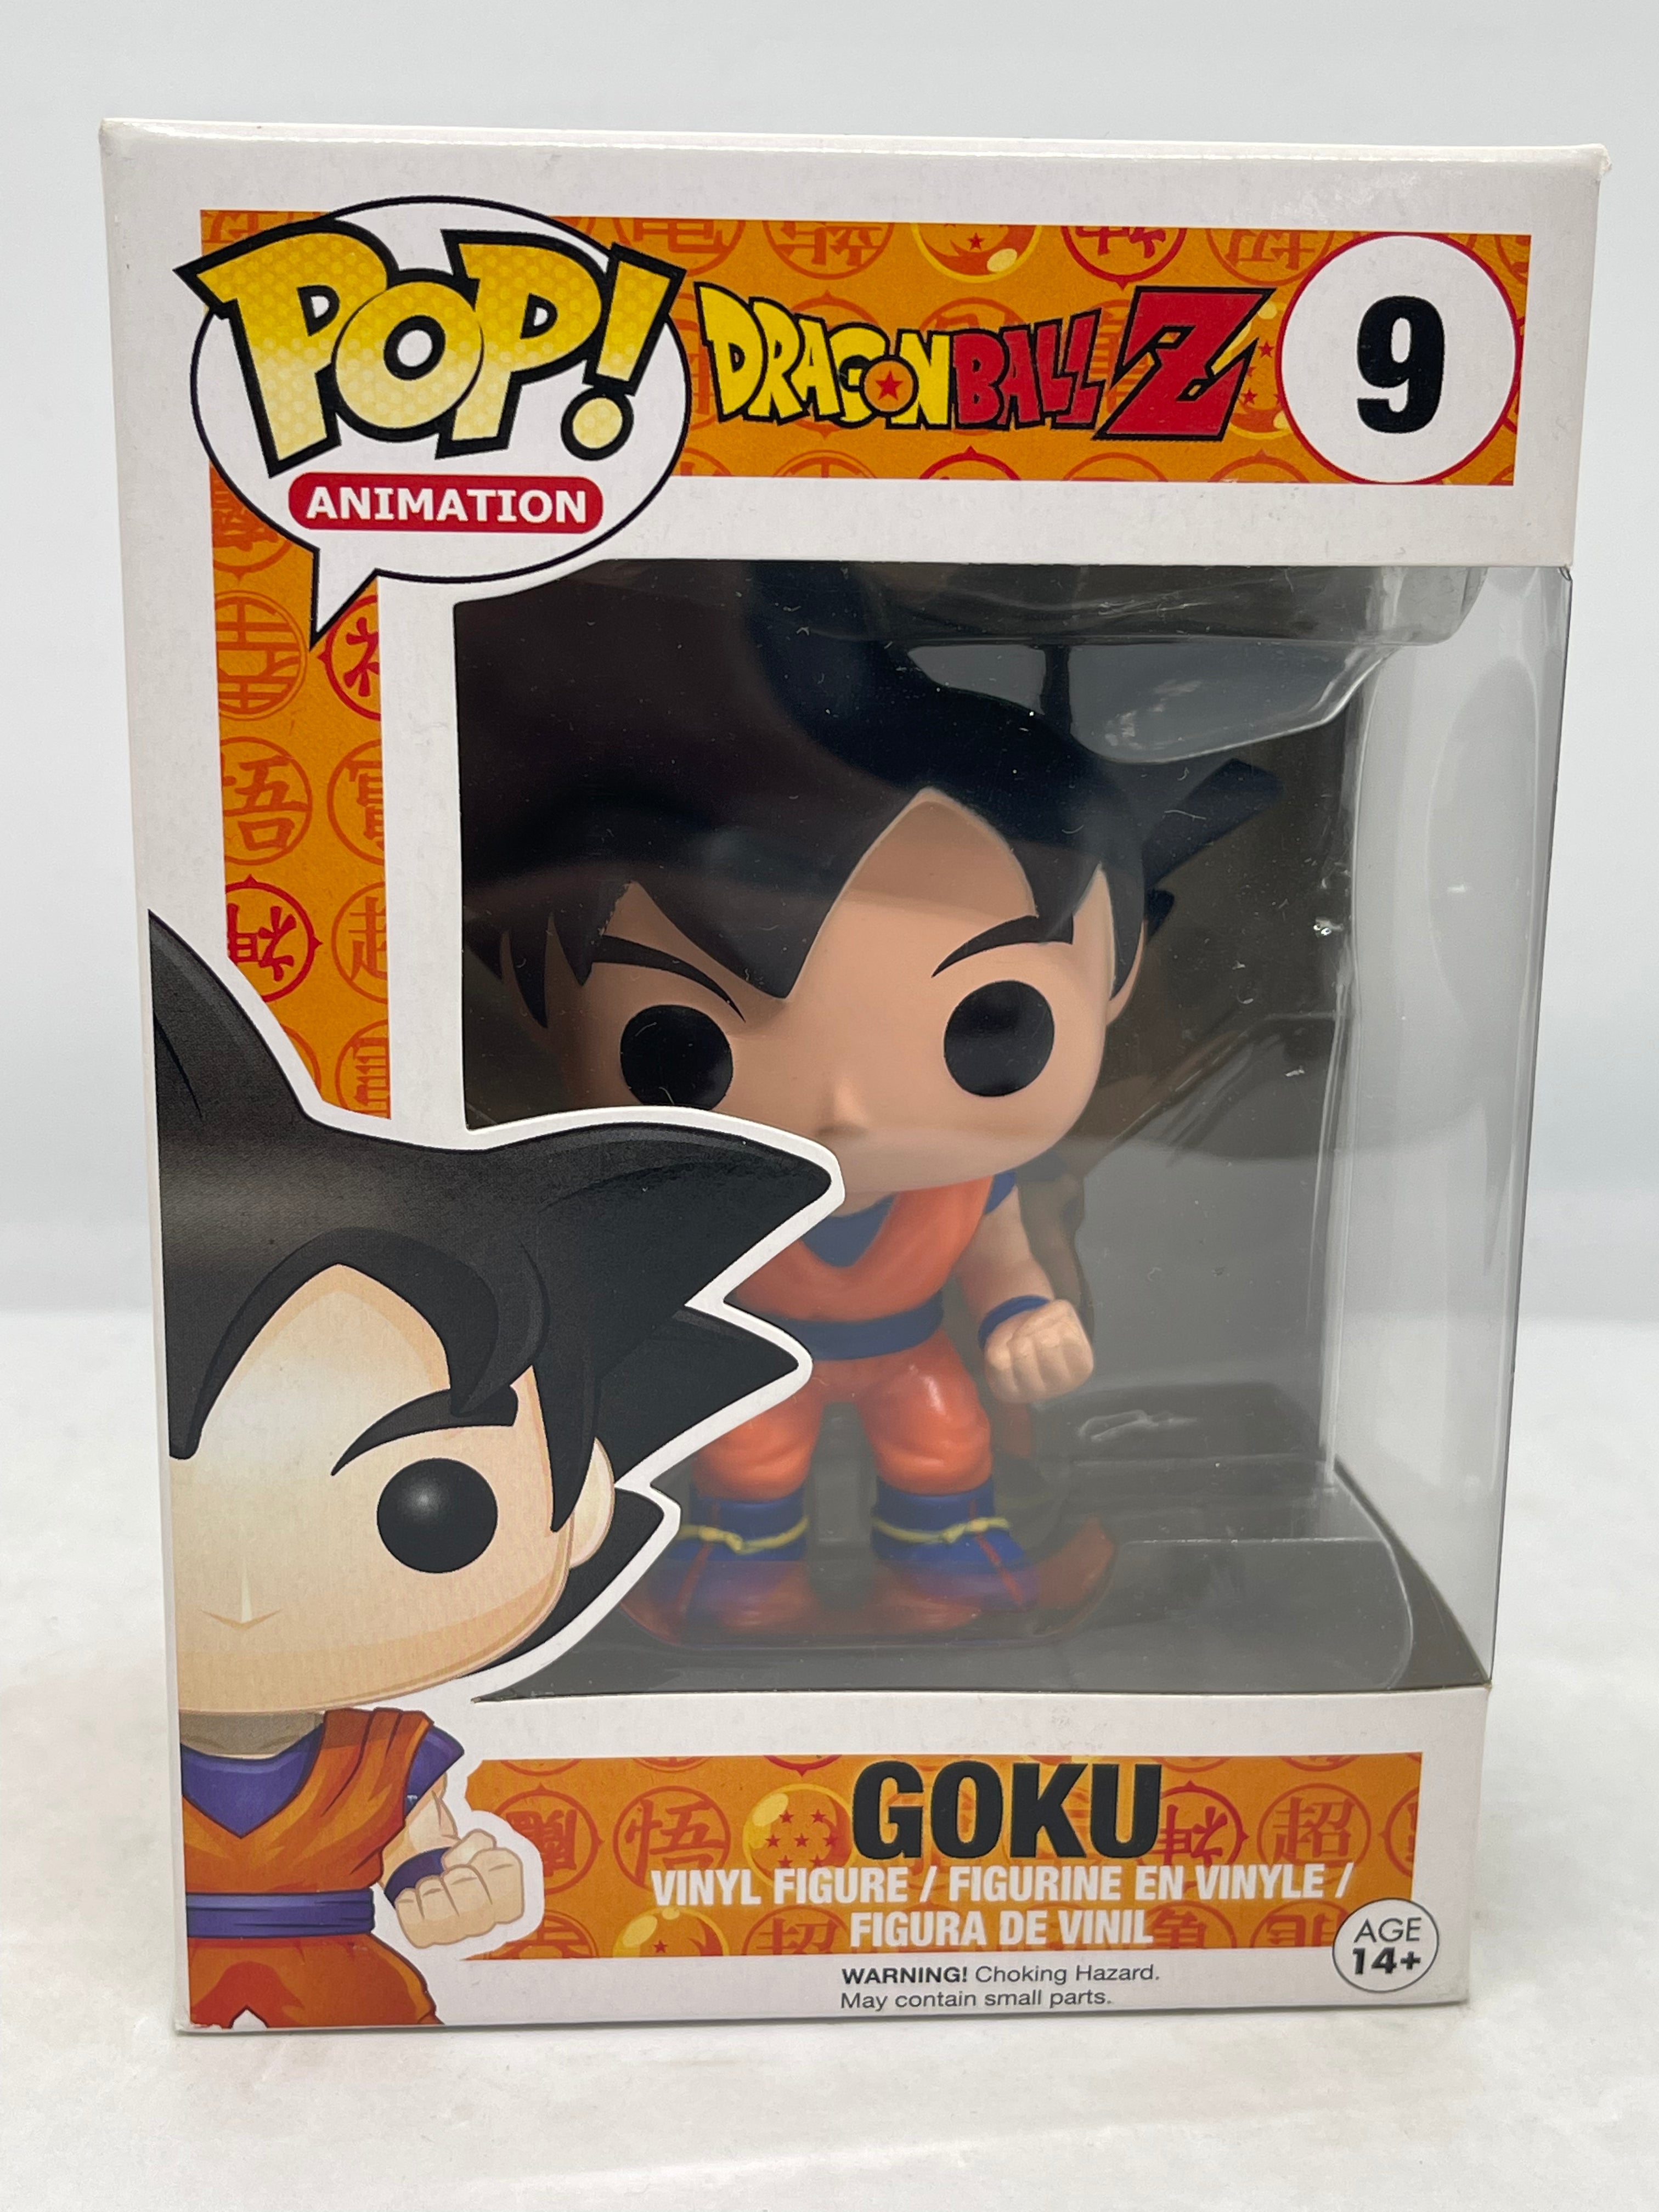 Funko Pop! Dragon Ball Z Goku Exclusive #9